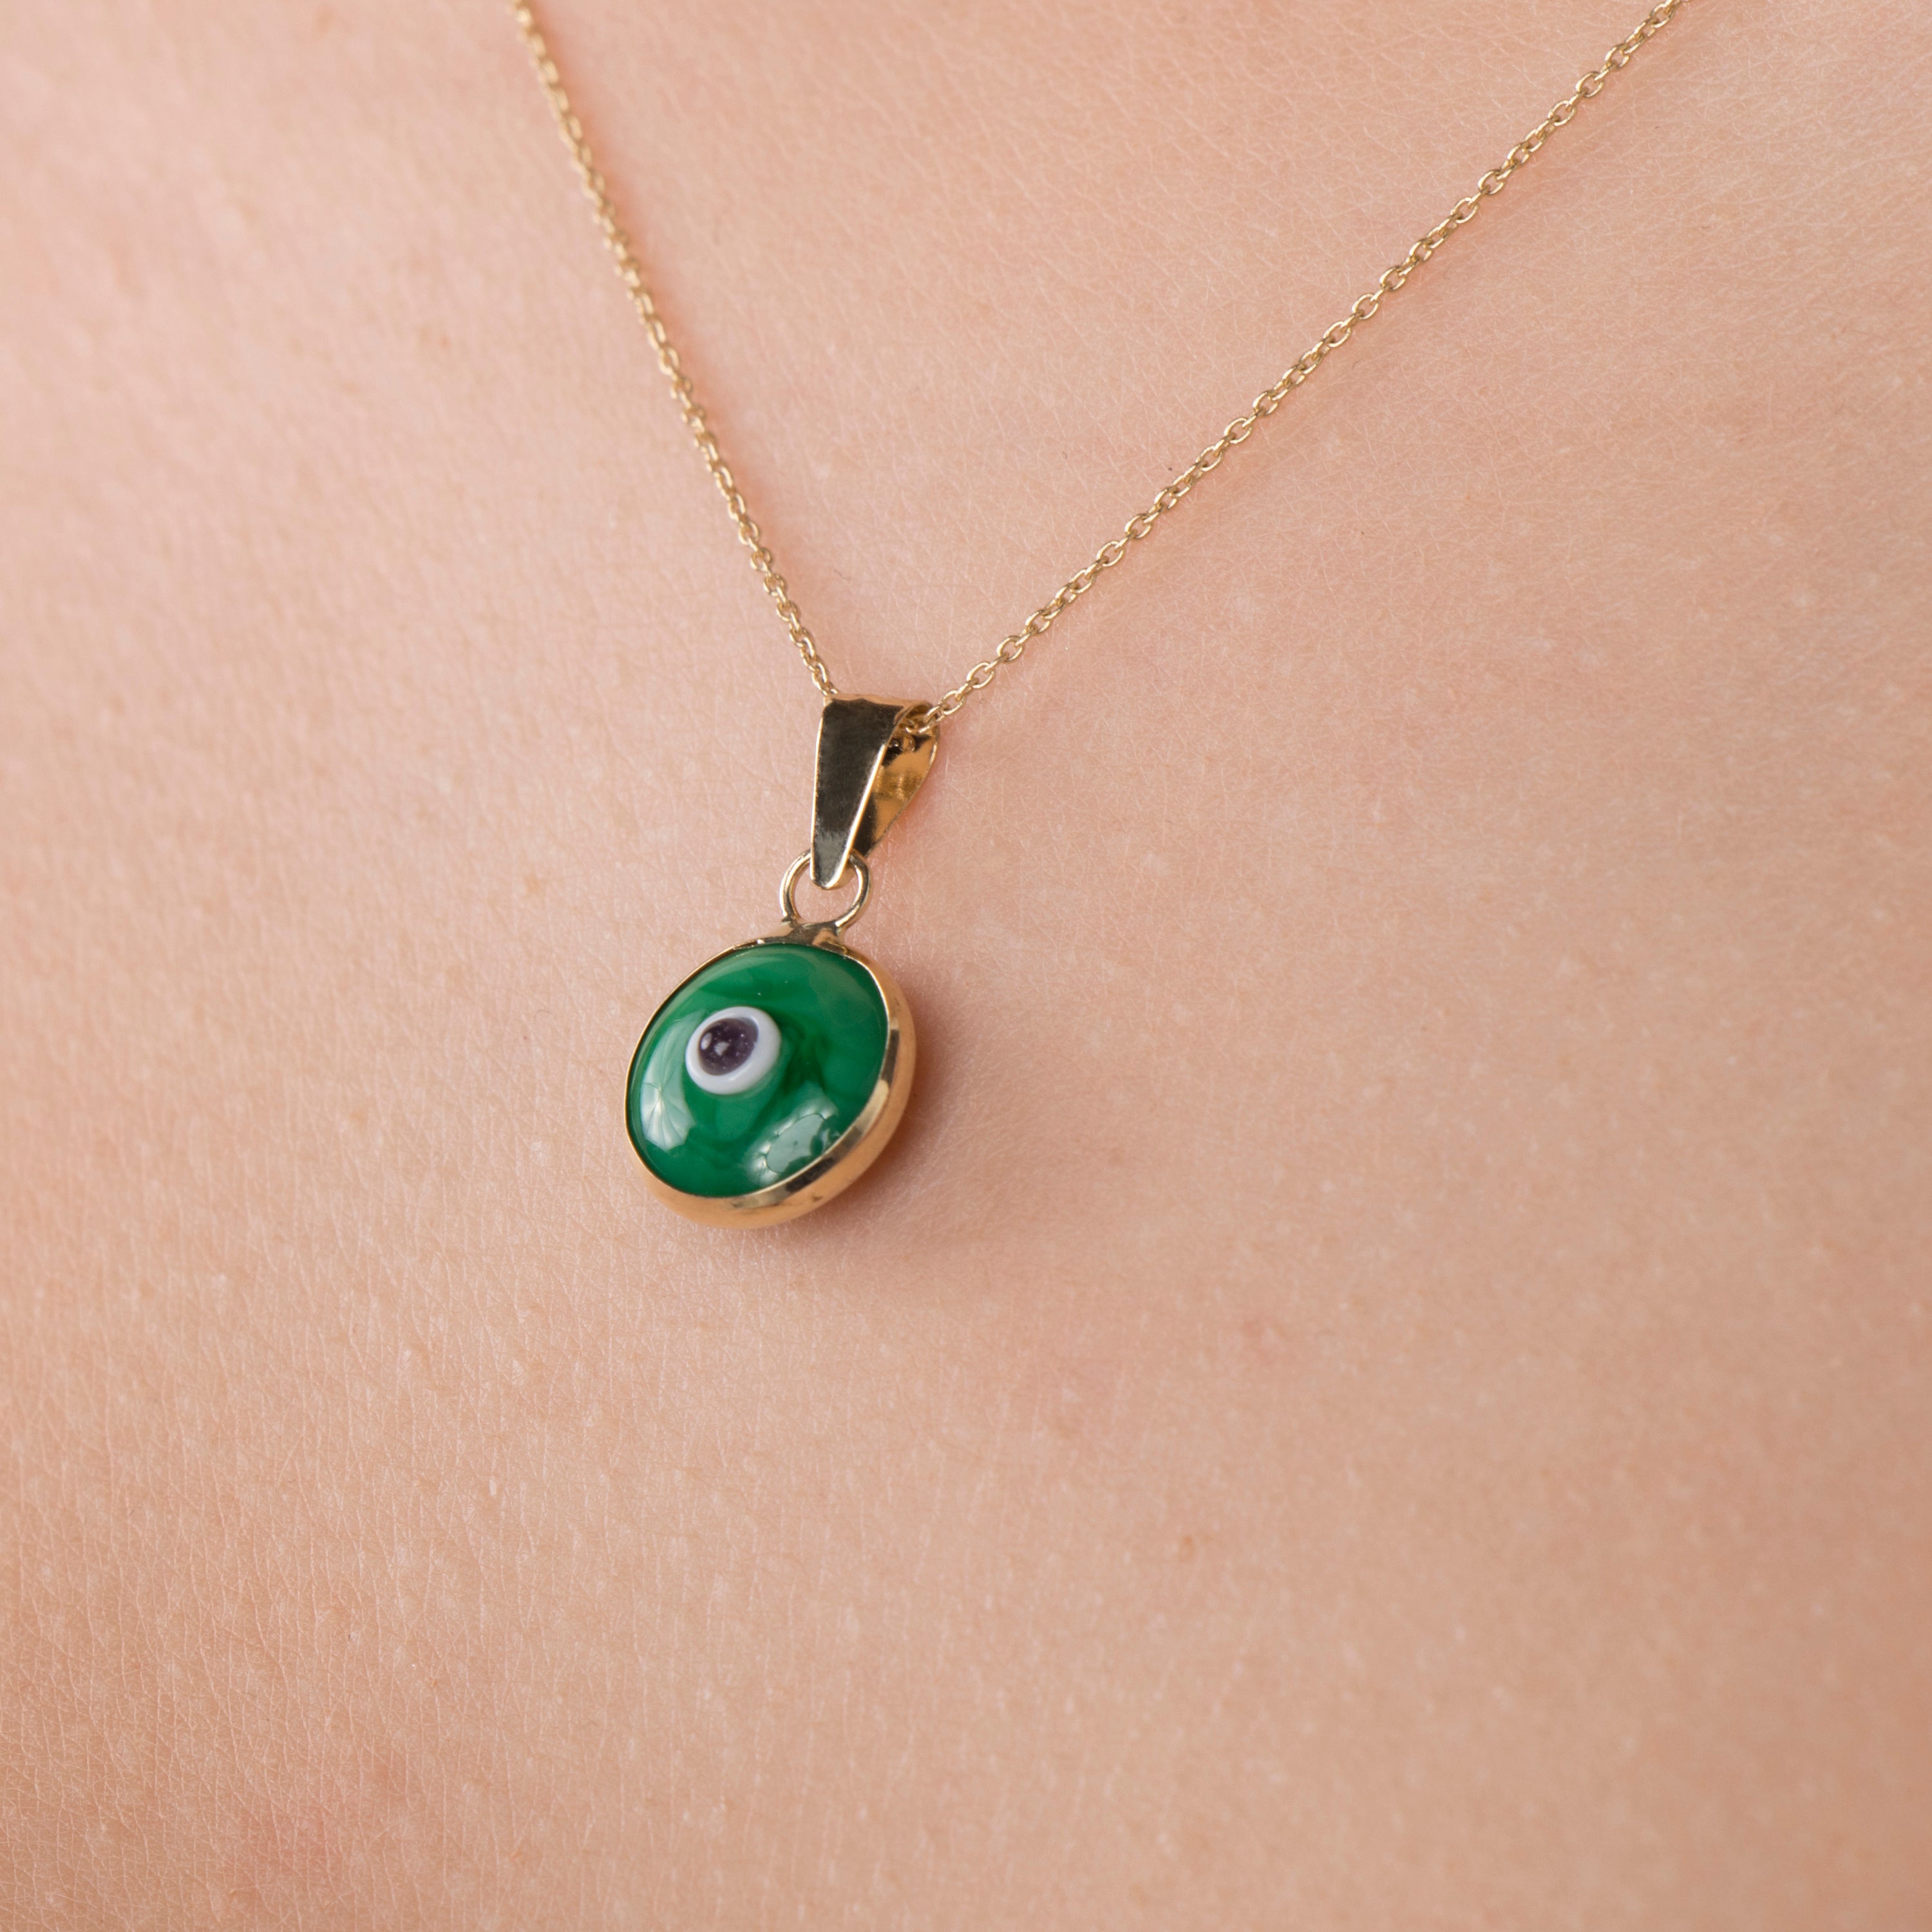 Green Evil Eye Pendant Necklace in 14K Gold